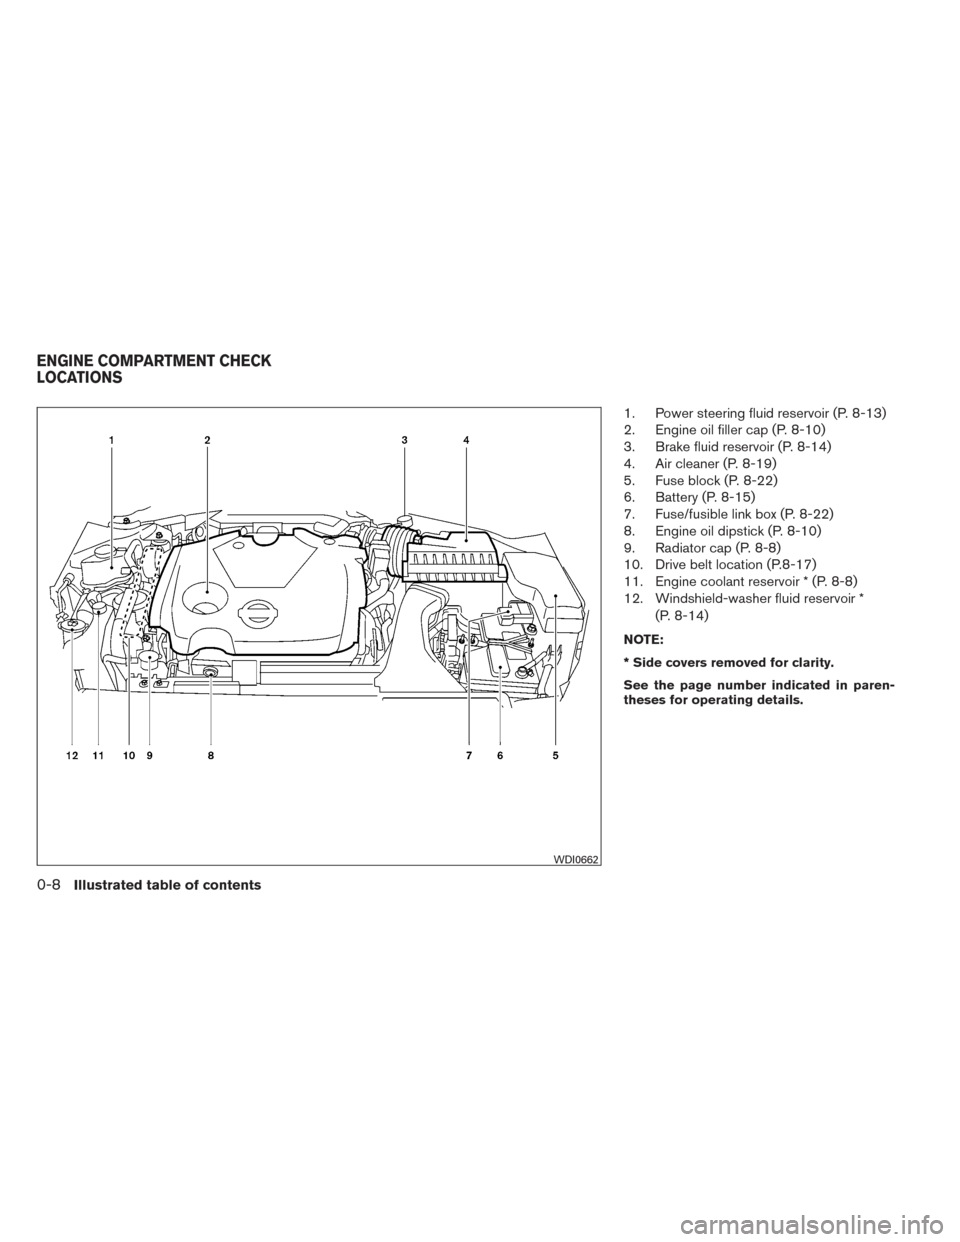 NISSAN MAXIMA 2014 A35 / 7.G Owners Manual 1. Power steering fluid reservoir (P. 8-13)
2. Engine oil filler cap (P. 8-10)
3. Brake fluid reservoir (P. 8-14)
4. Air cleaner (P. 8-19)
5. Fuse block (P. 8-22)
6. Battery (P. 8-15)
7. Fuse/fusible 